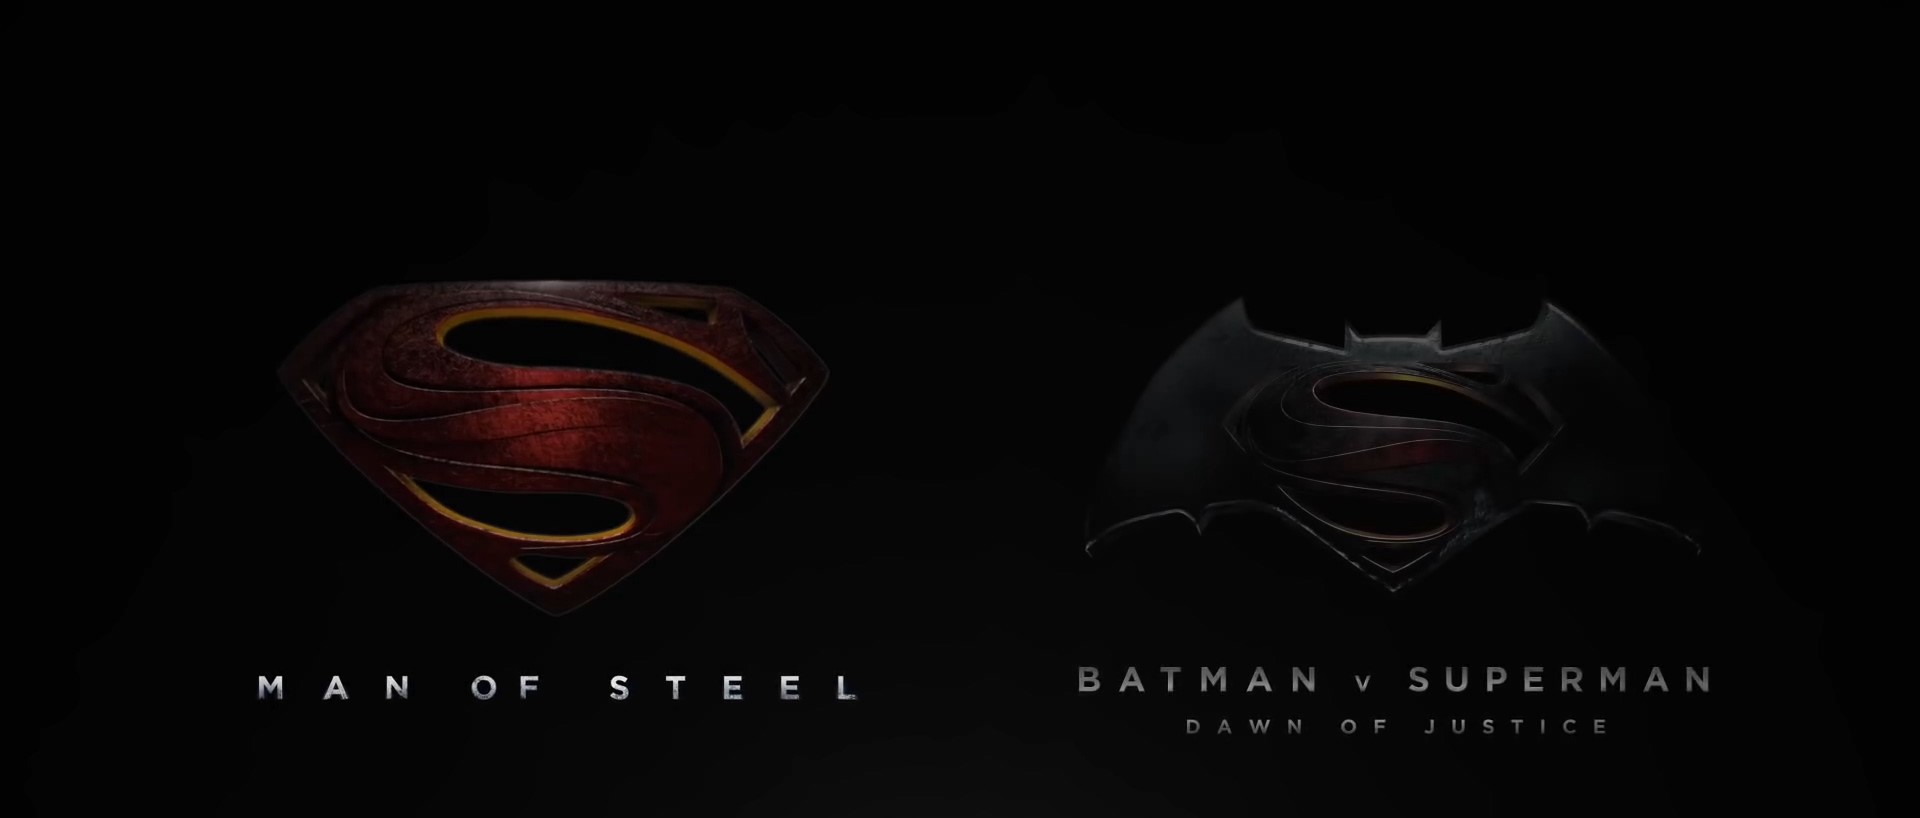 Zack Snyder’s Justice League - Trilogy1.jpg